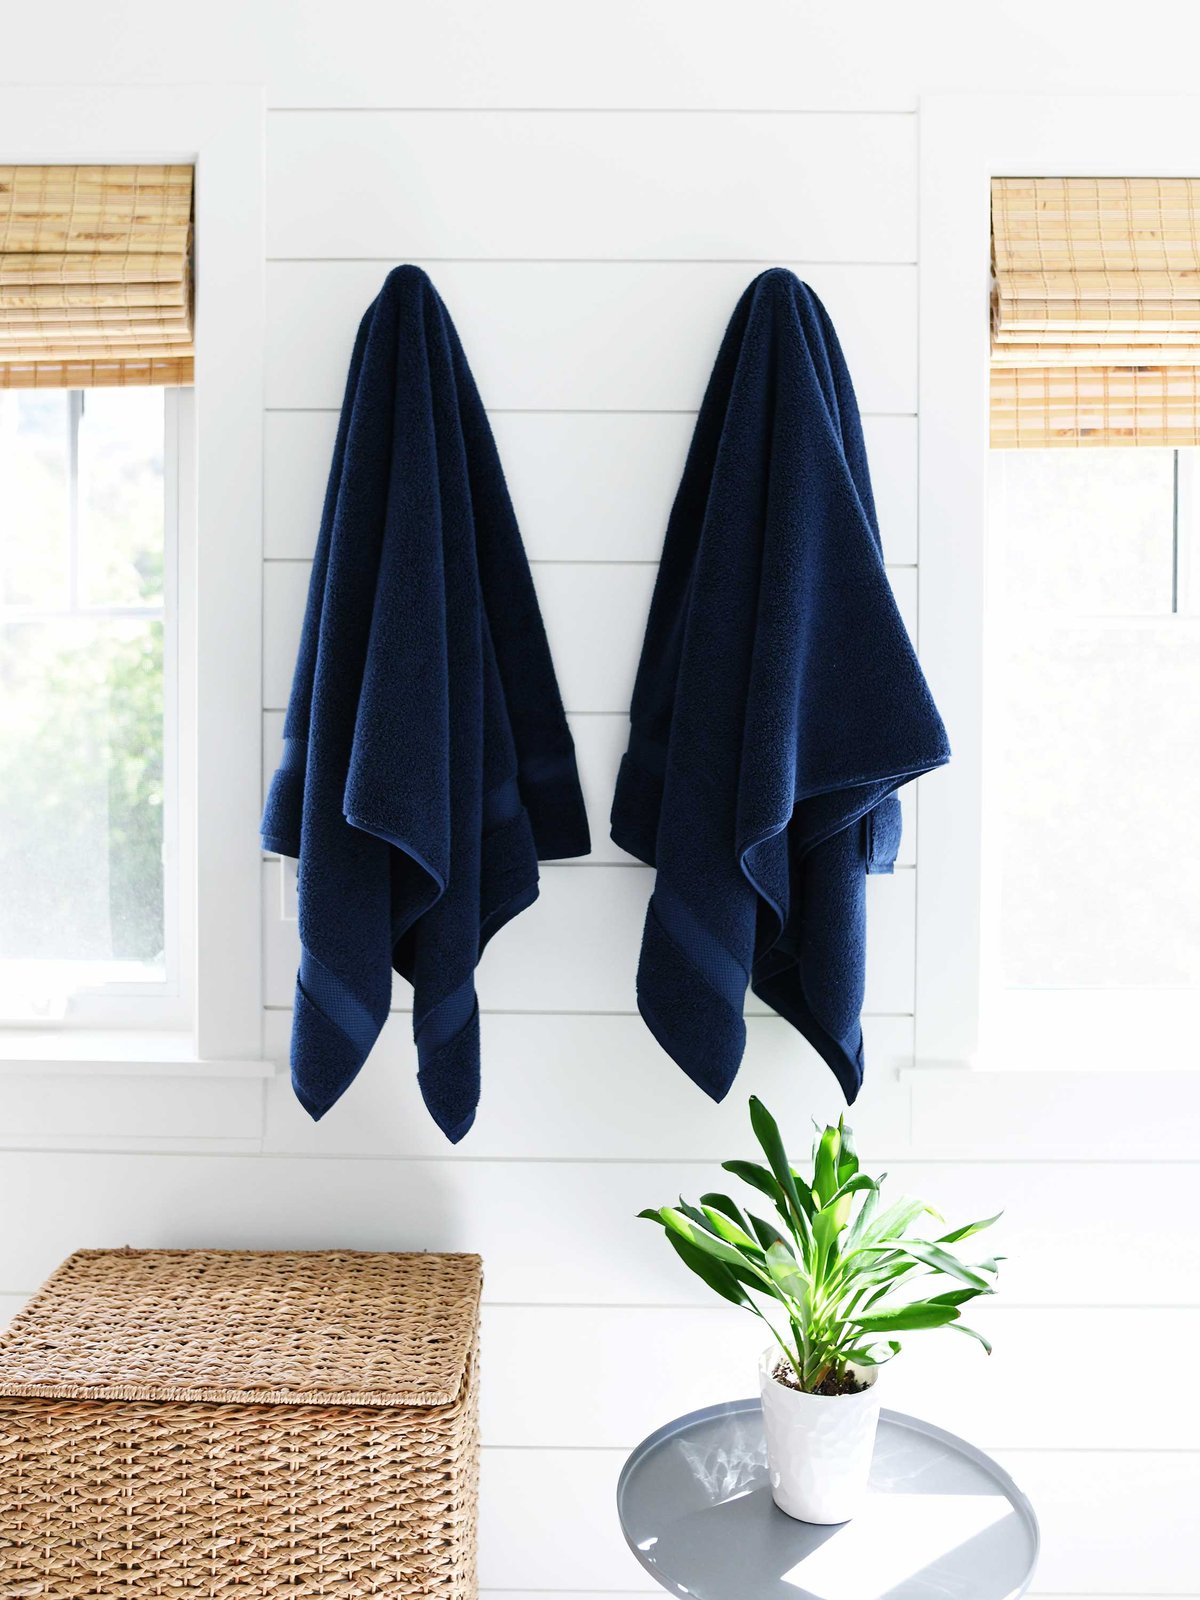 Premium Supima Cotton Bath Towel